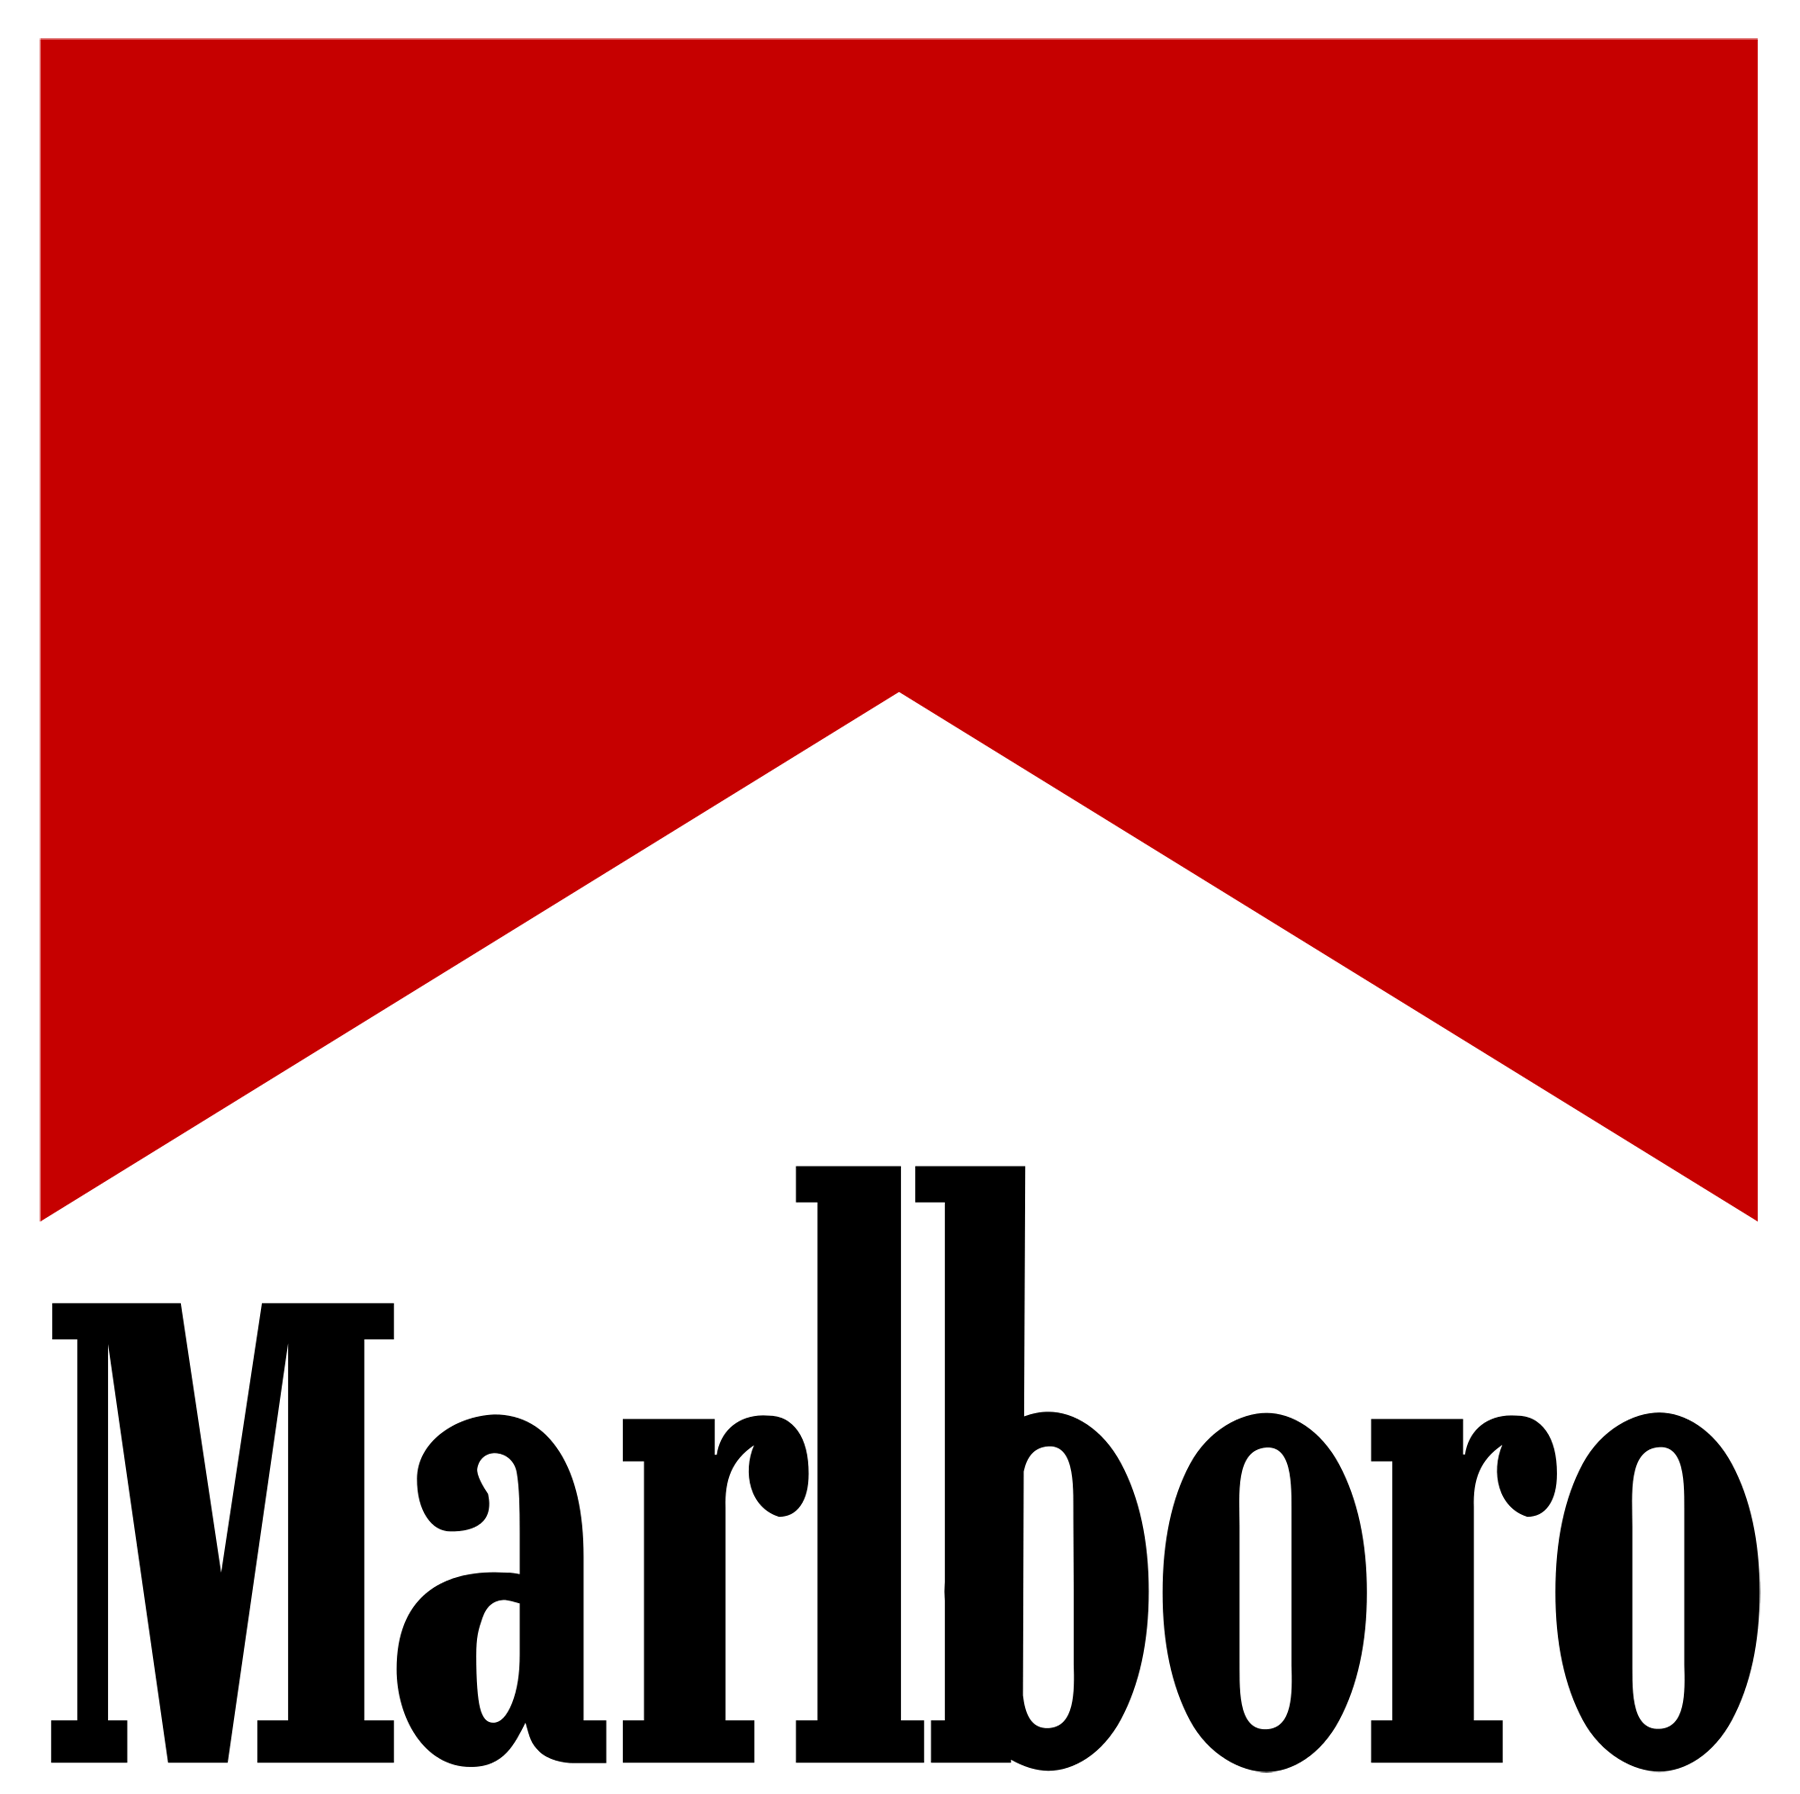 Red White Blue USA Company Logo - Marlboro Logo, symbol, meaning, History and Evolution